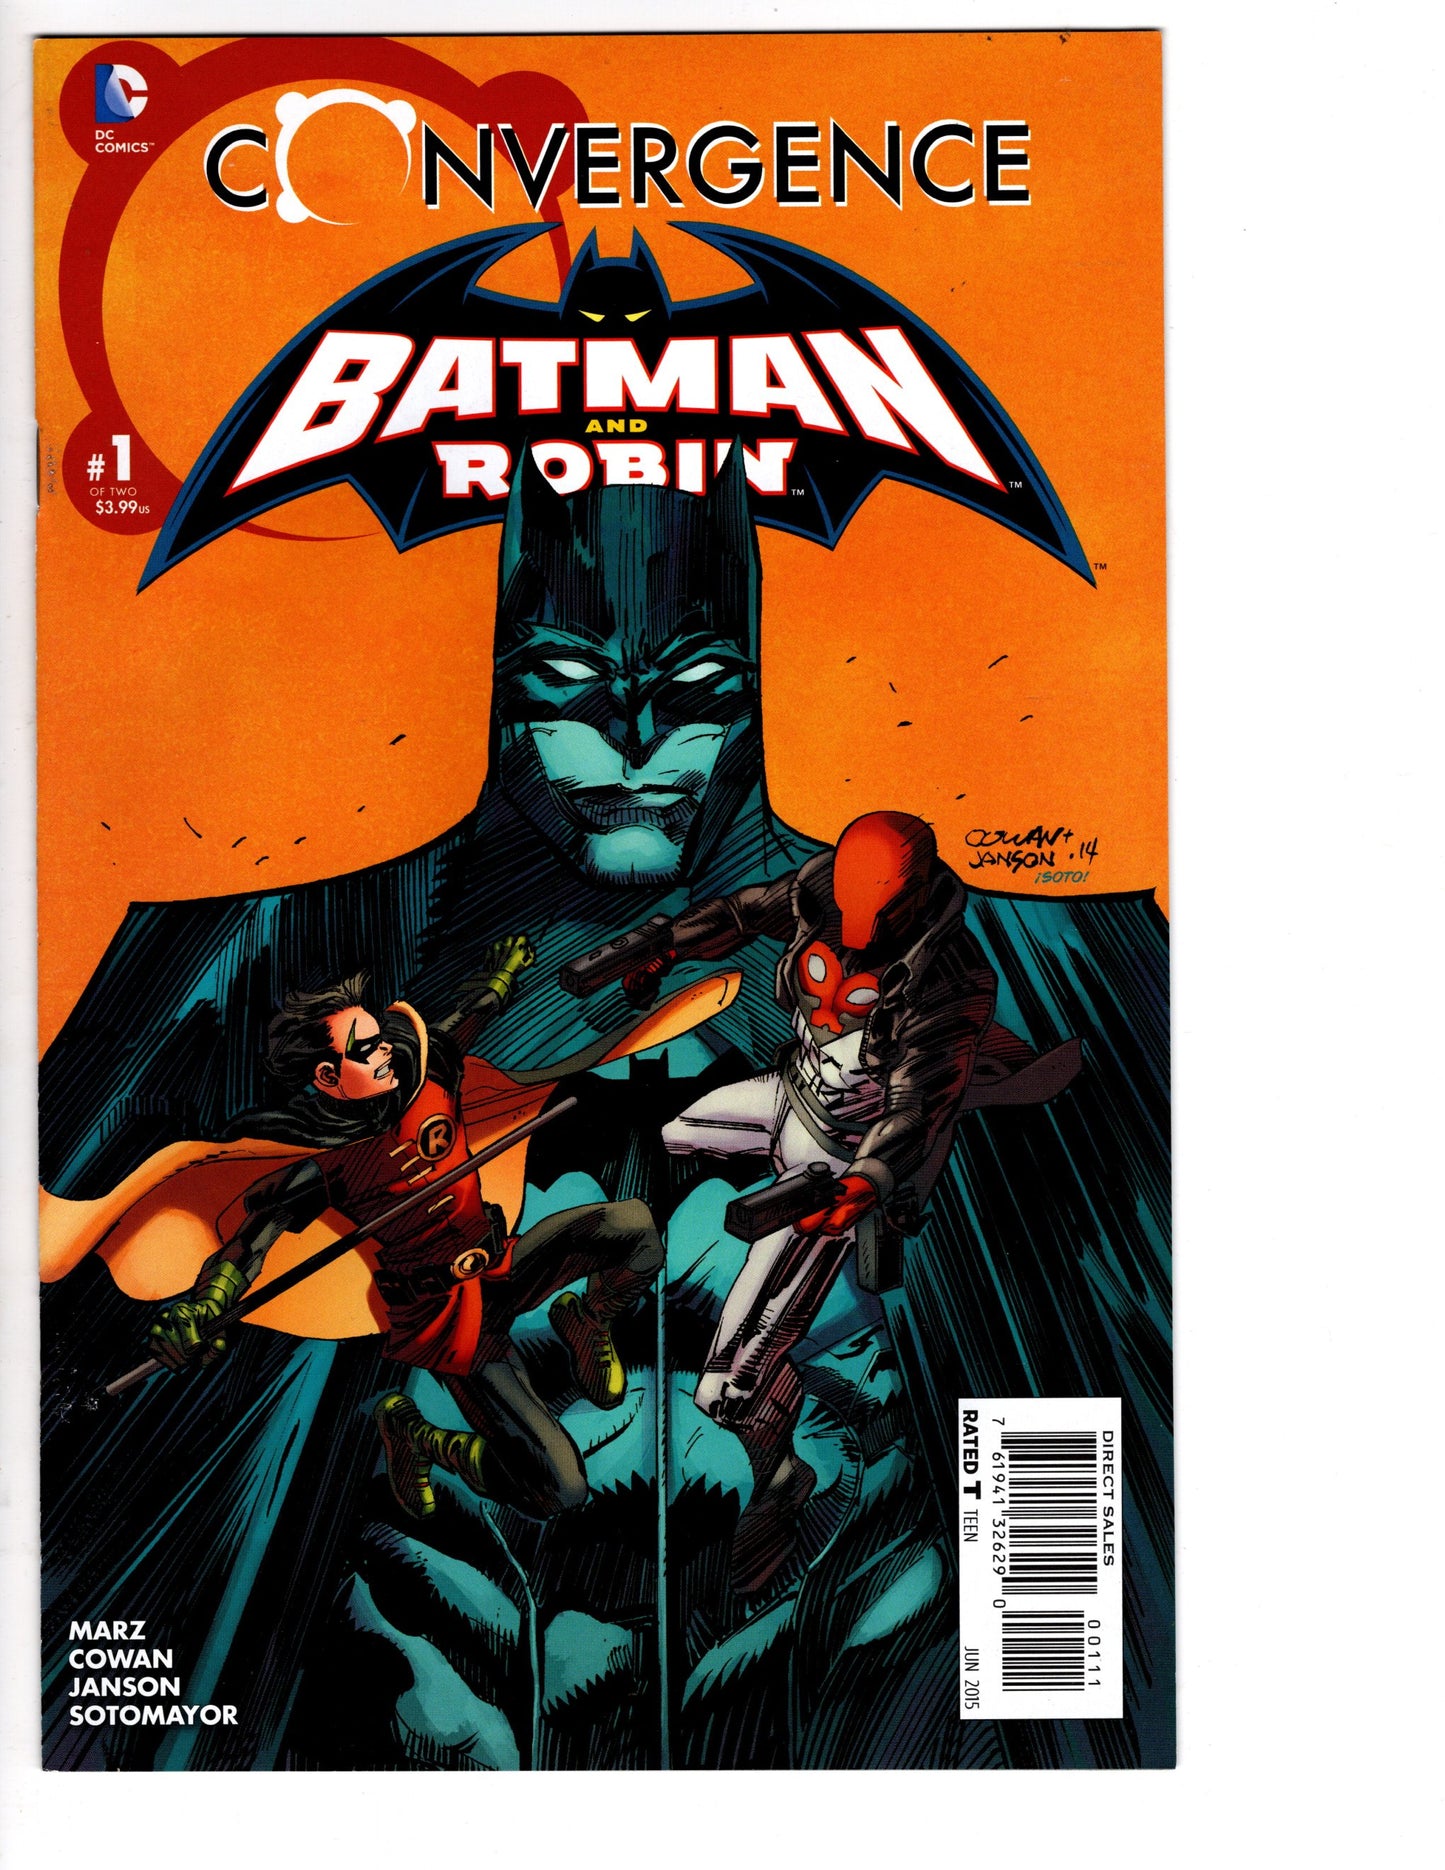 Convergence Batman and Robin #1